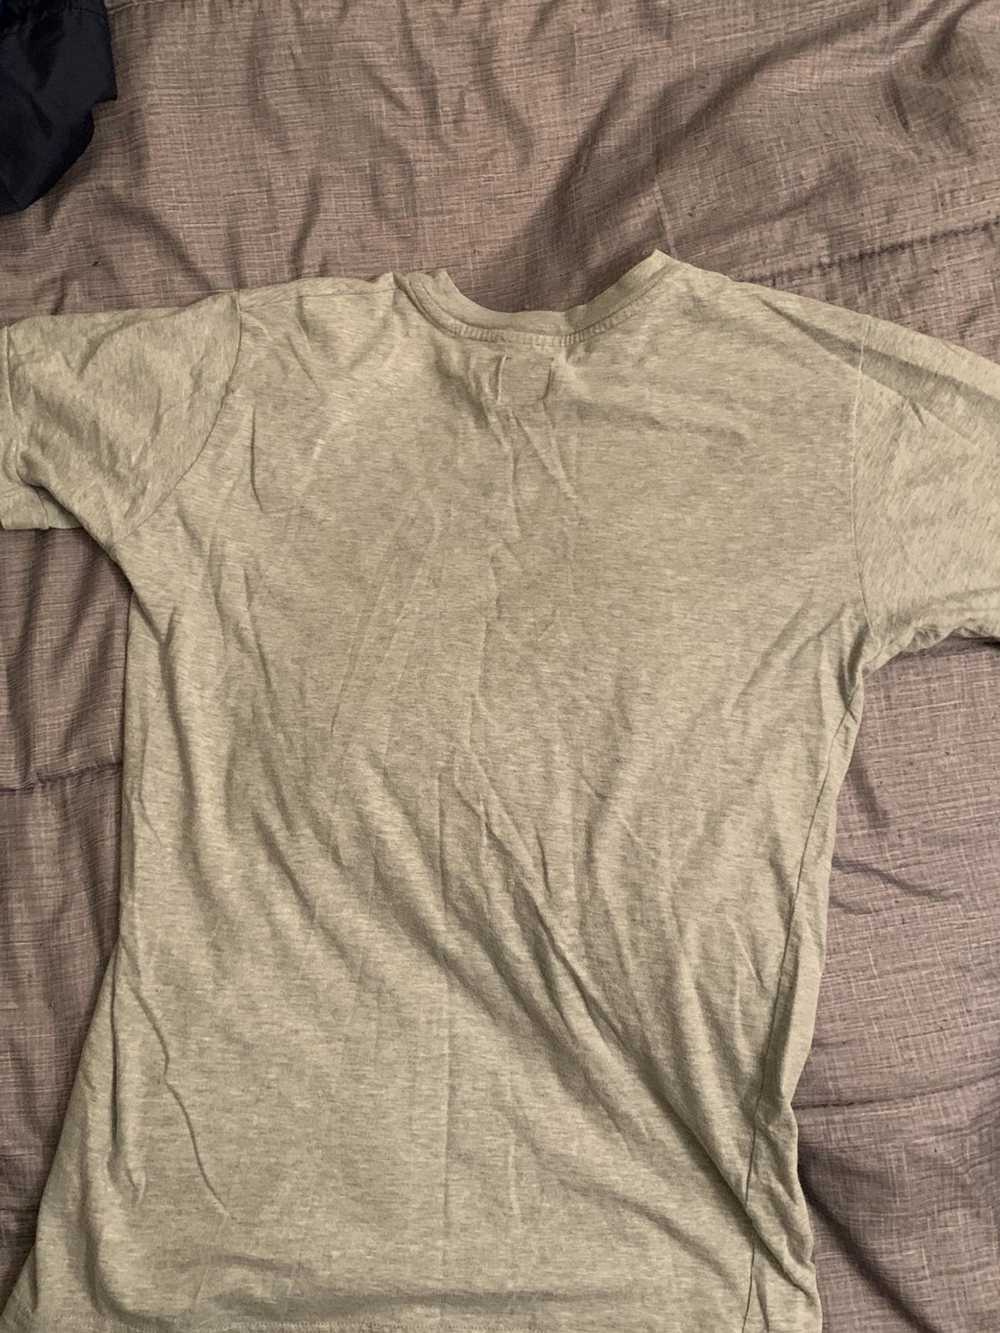 Moschino Rare Moschino Shit T shirt - image 4